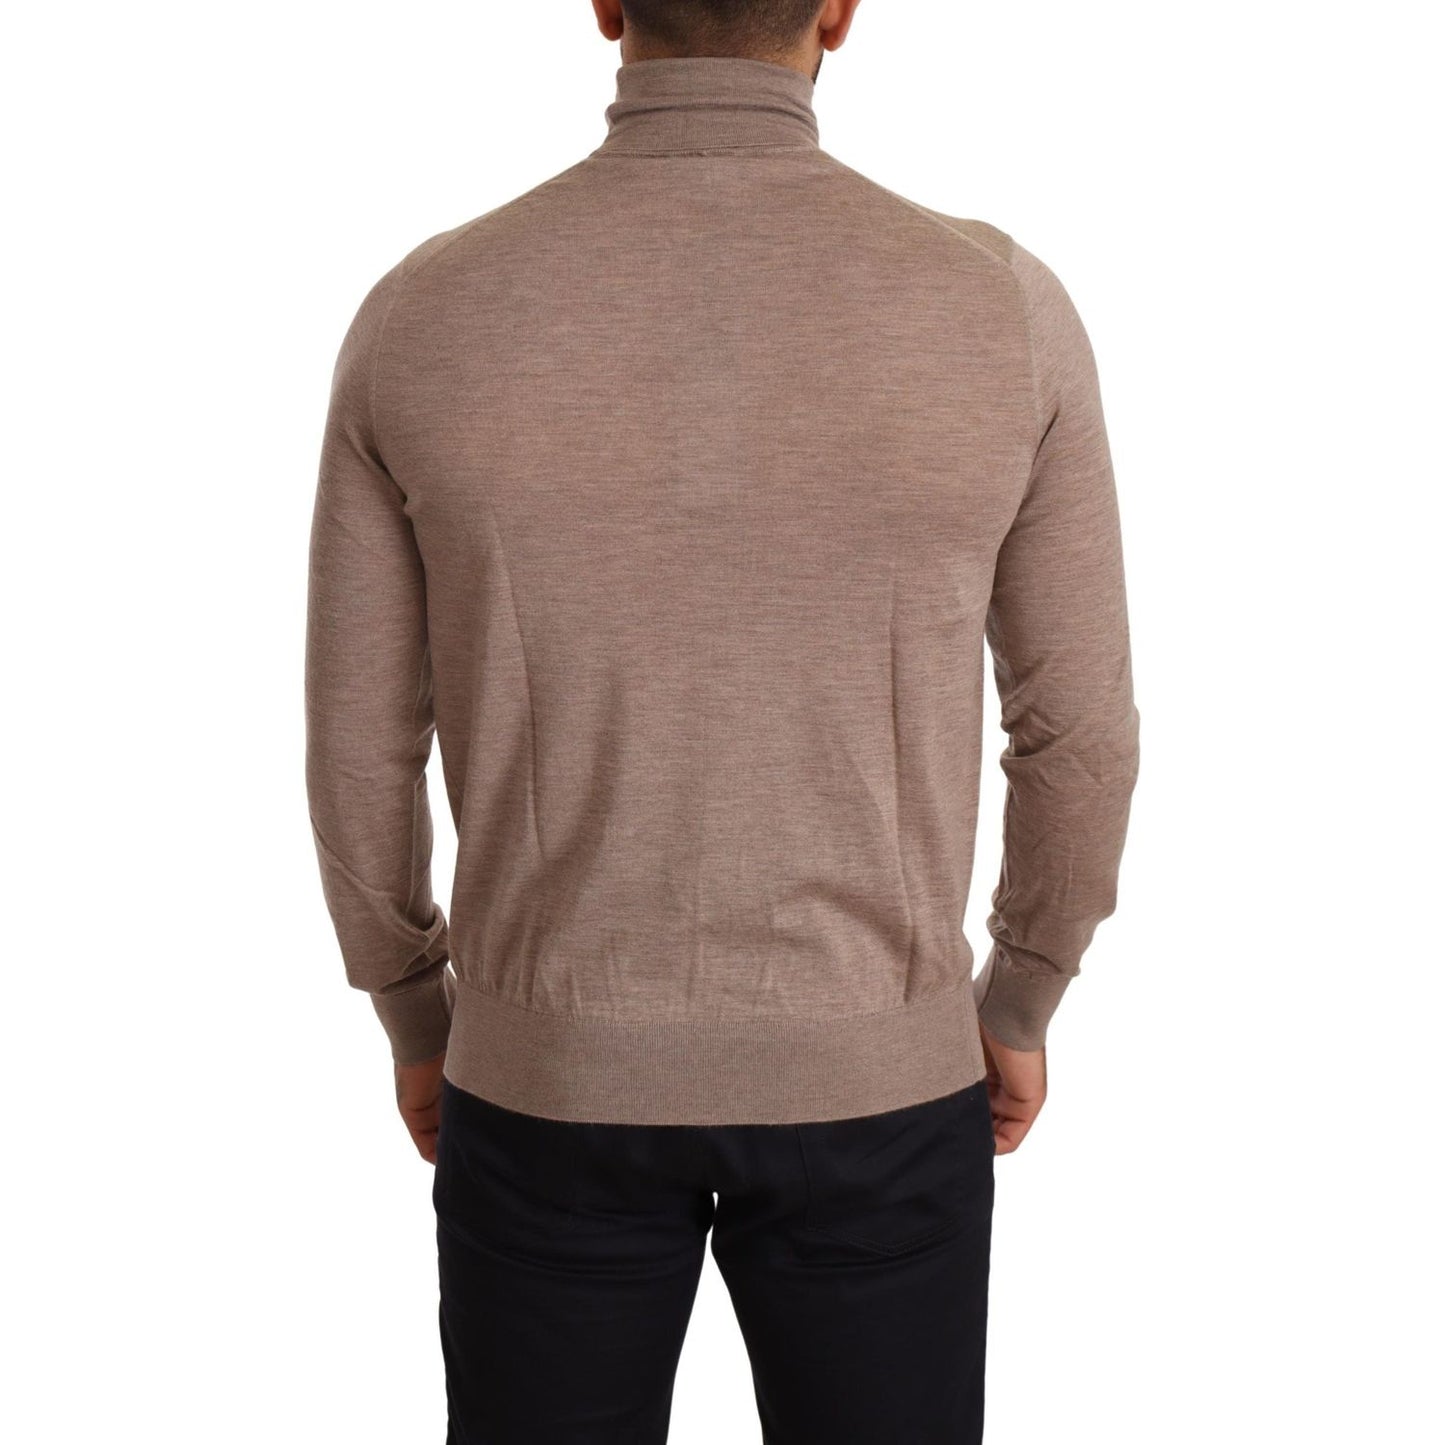 Dolce & Gabbana Elegant Cashmere Turtleneck Sweater brown-cashmere-turtleneck-pullover-sweater-1